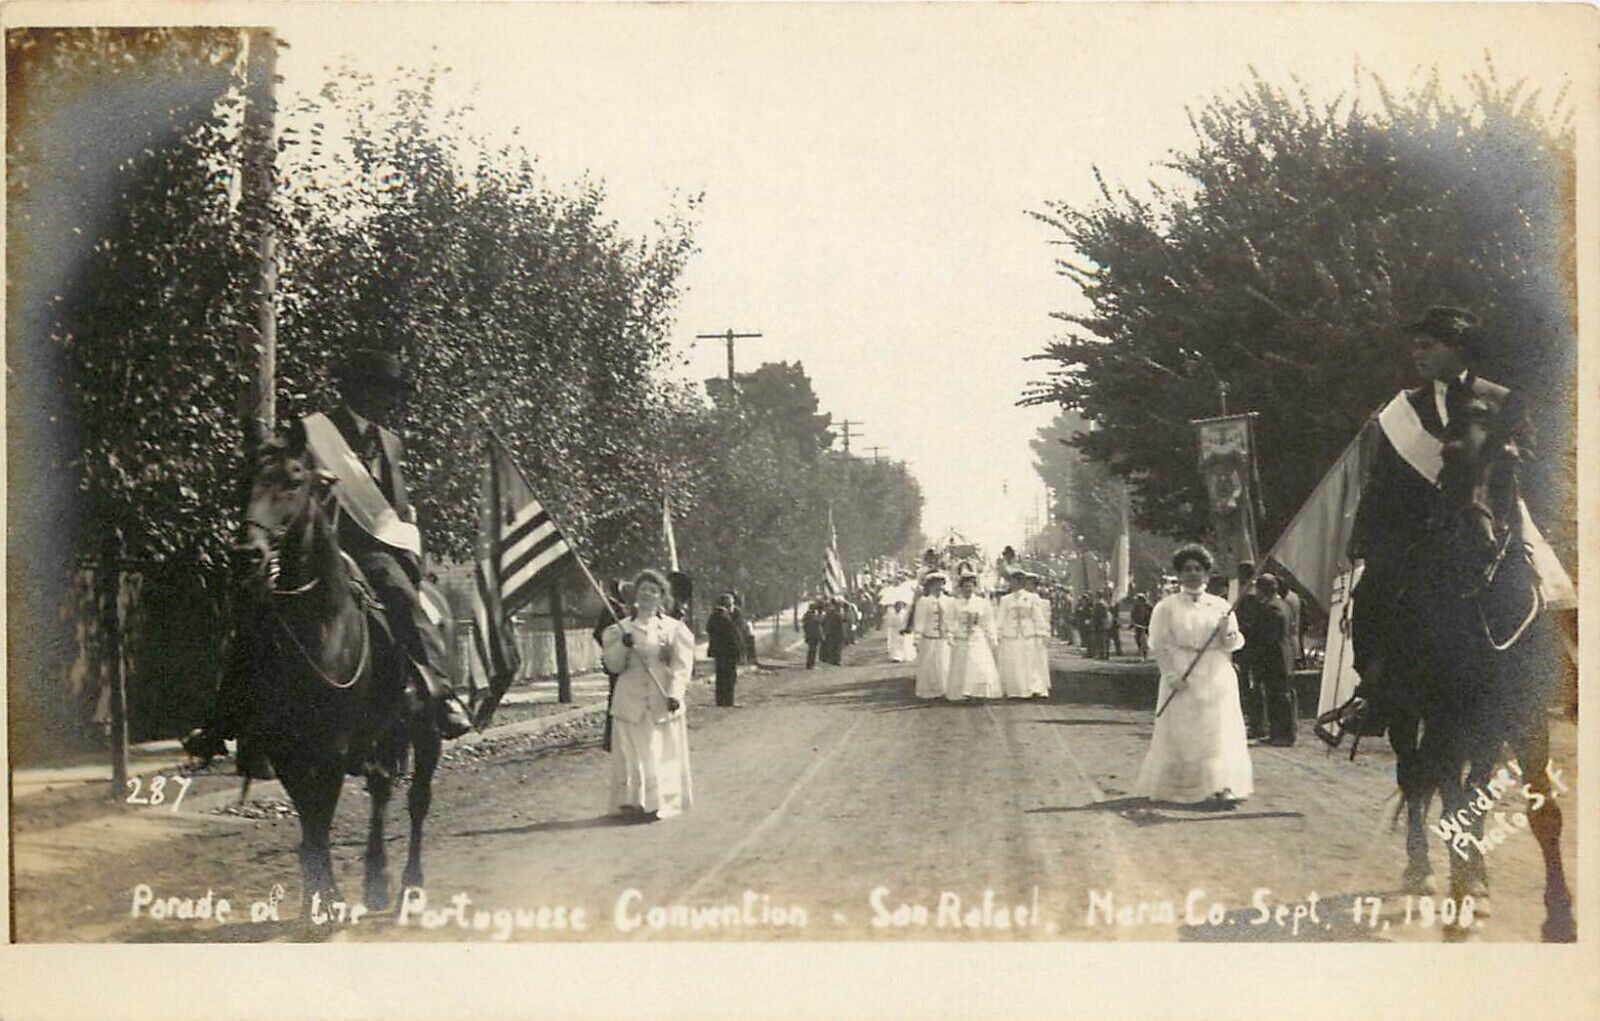 Weidner RPPC Parade Portuguese Convention, San Rafael Marin County Sept 17 1908